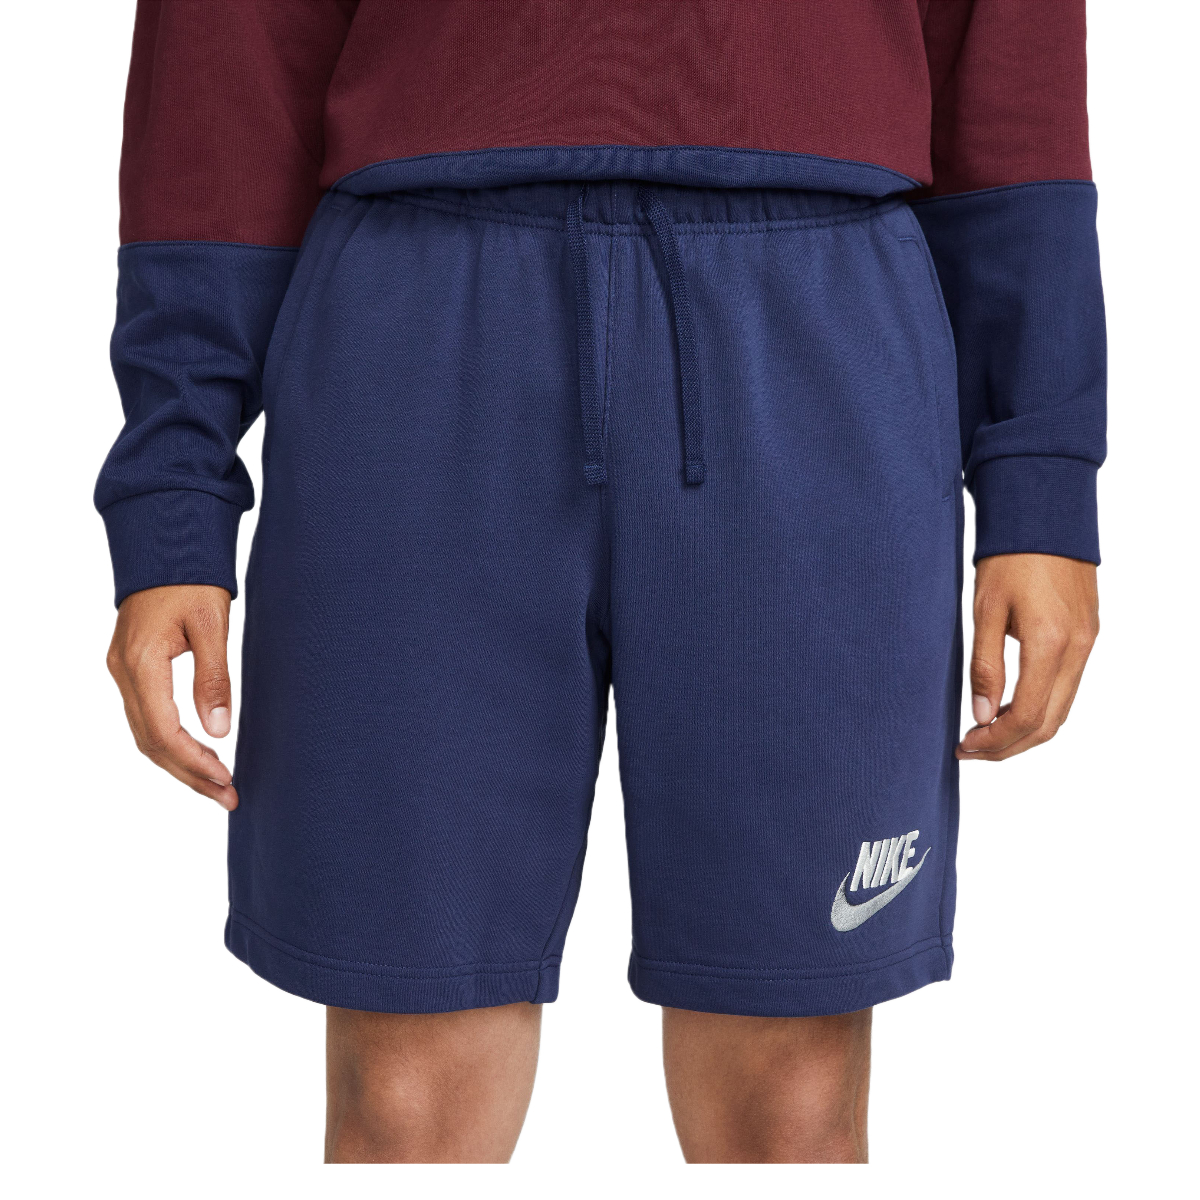 Buy Nike Club - Men's Shorts online